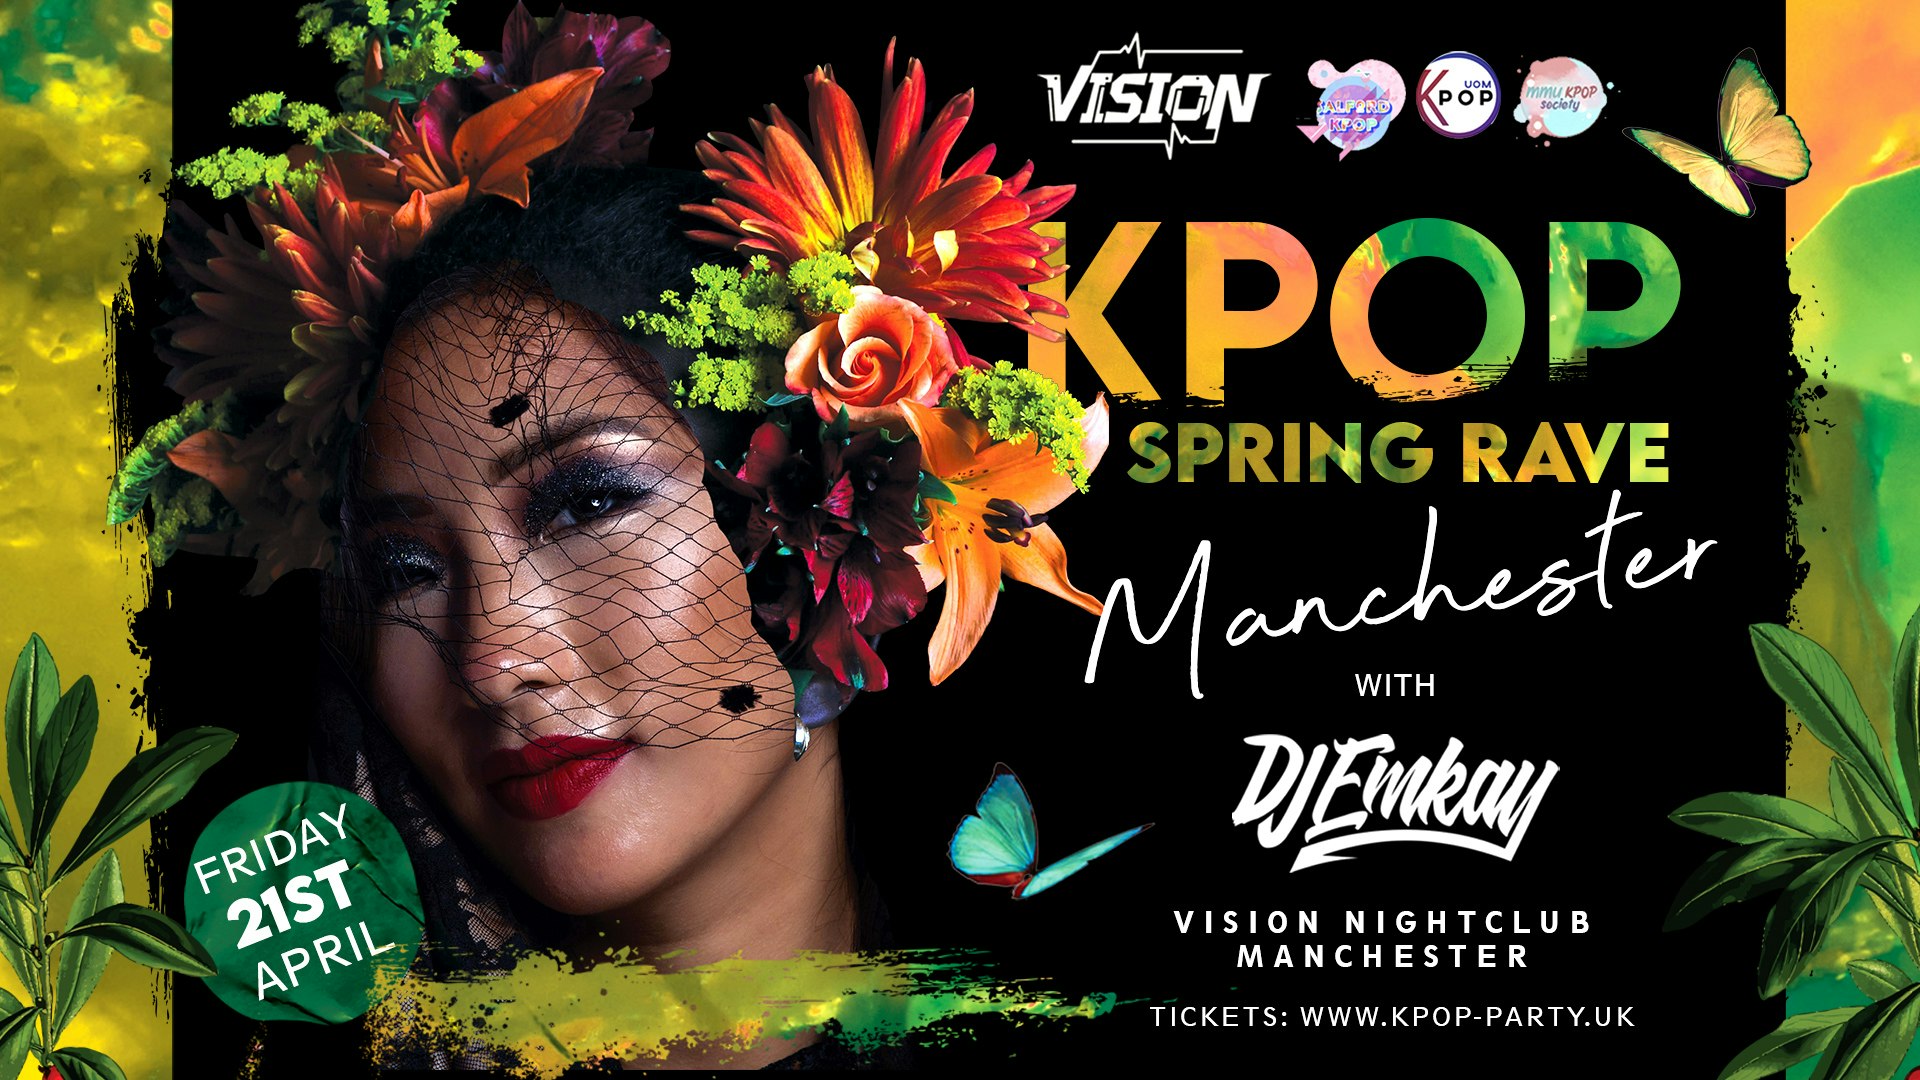 K-Pop Spring Rave Manchester – with DJ EMKAY | Friday 21st April